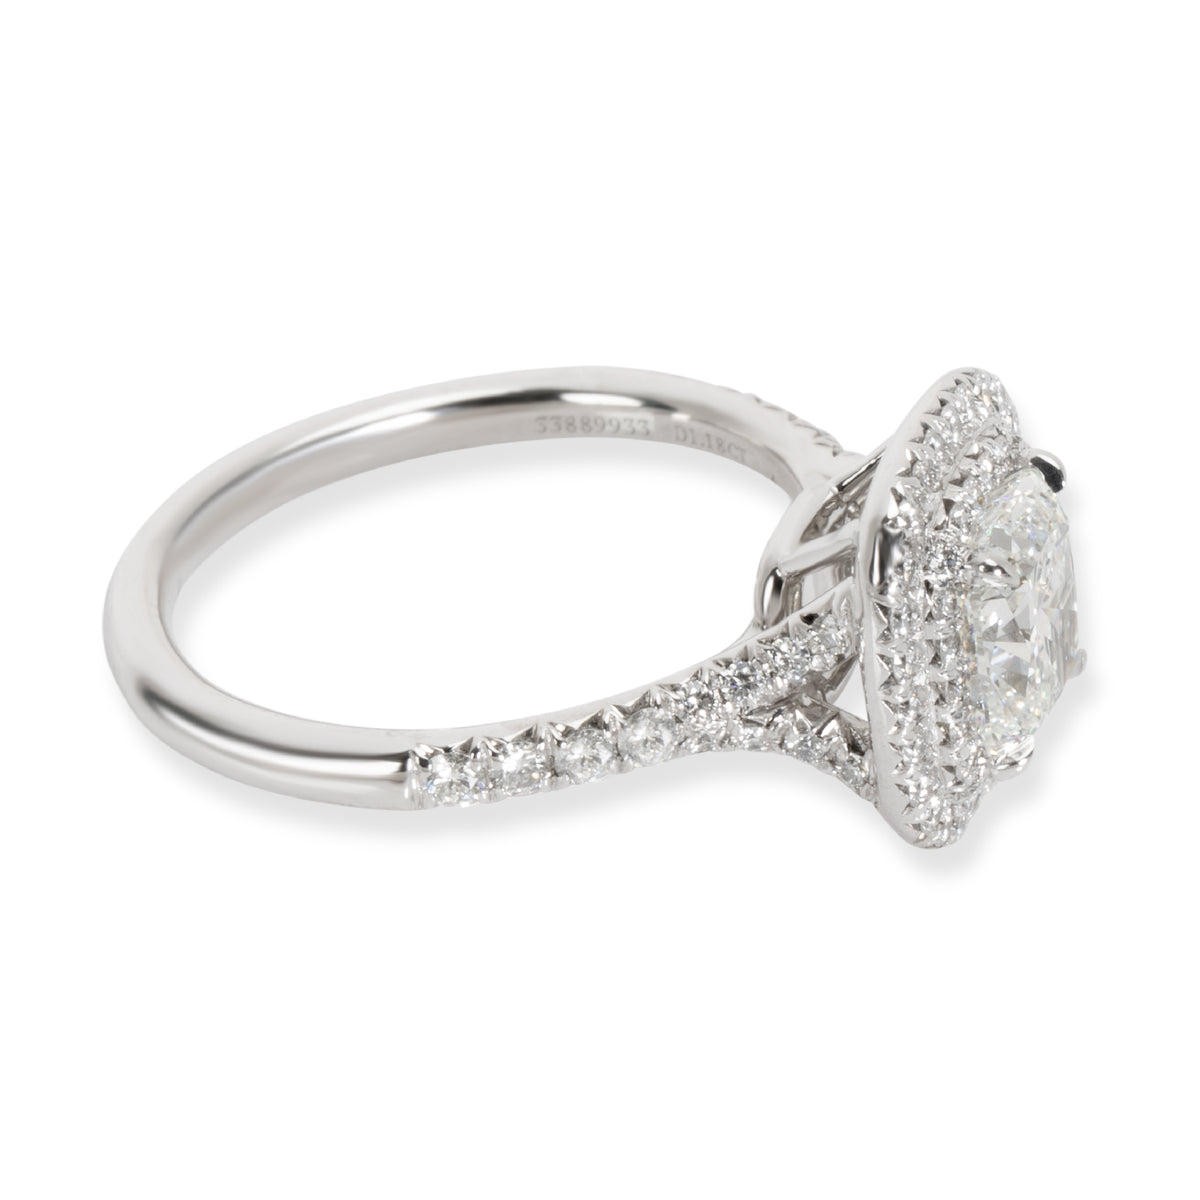 Tiffany & Co. Soleste Diamond Halo Engagement Ring in Platinum H IF 1.45 CTW